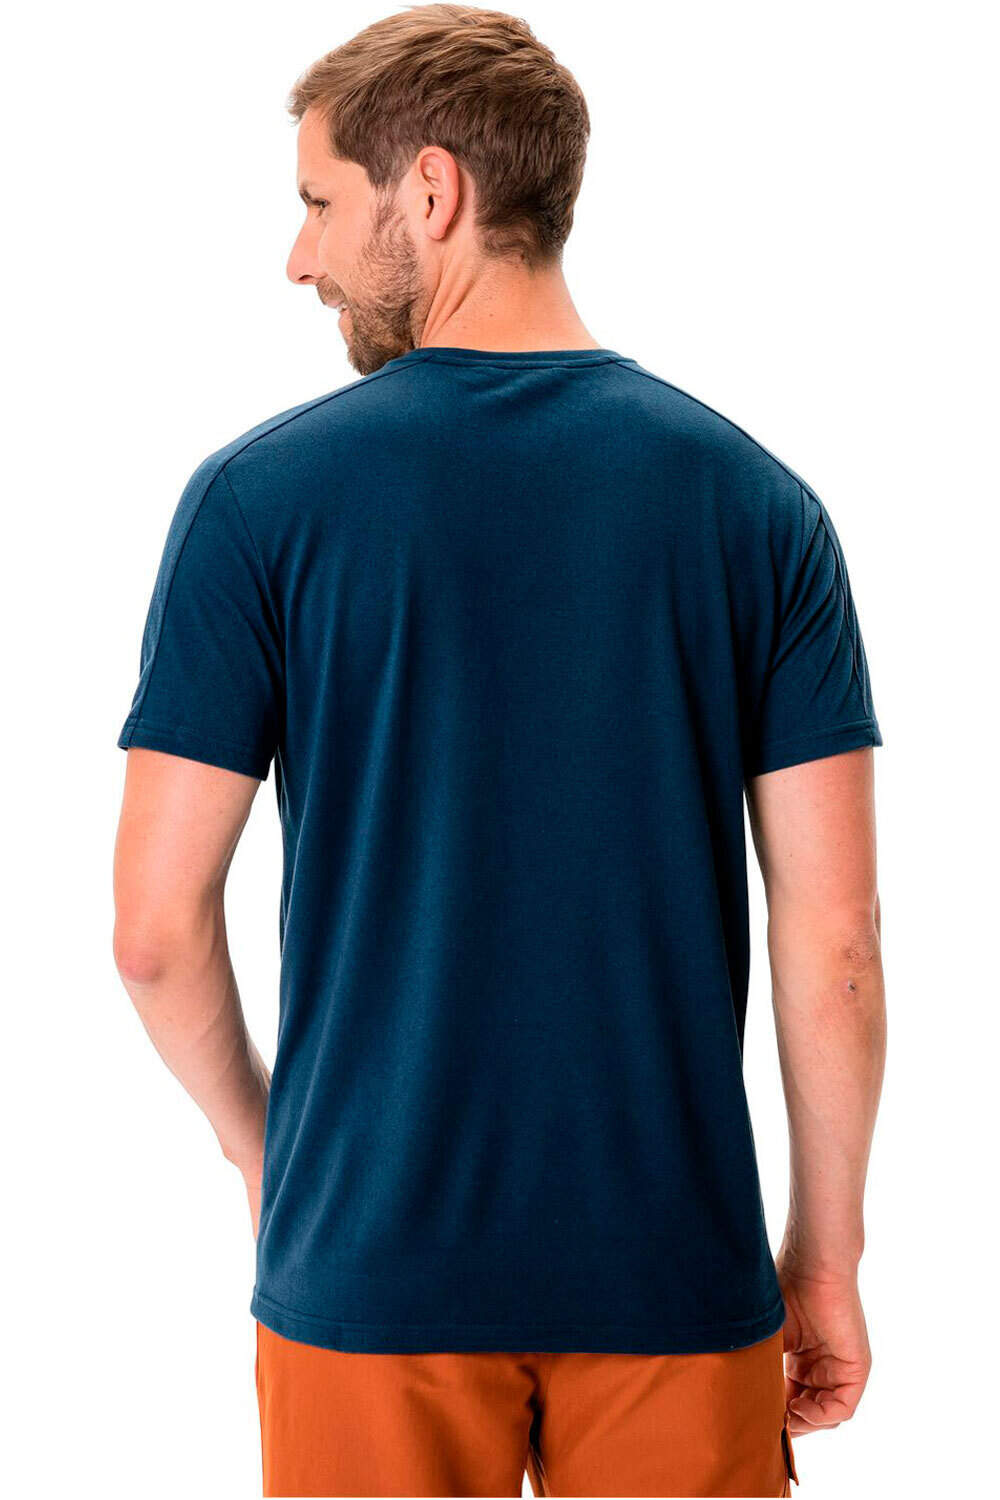 Vaude camiseta montaña manga corta hombre Men s Gleann T-Shirt vista trasera